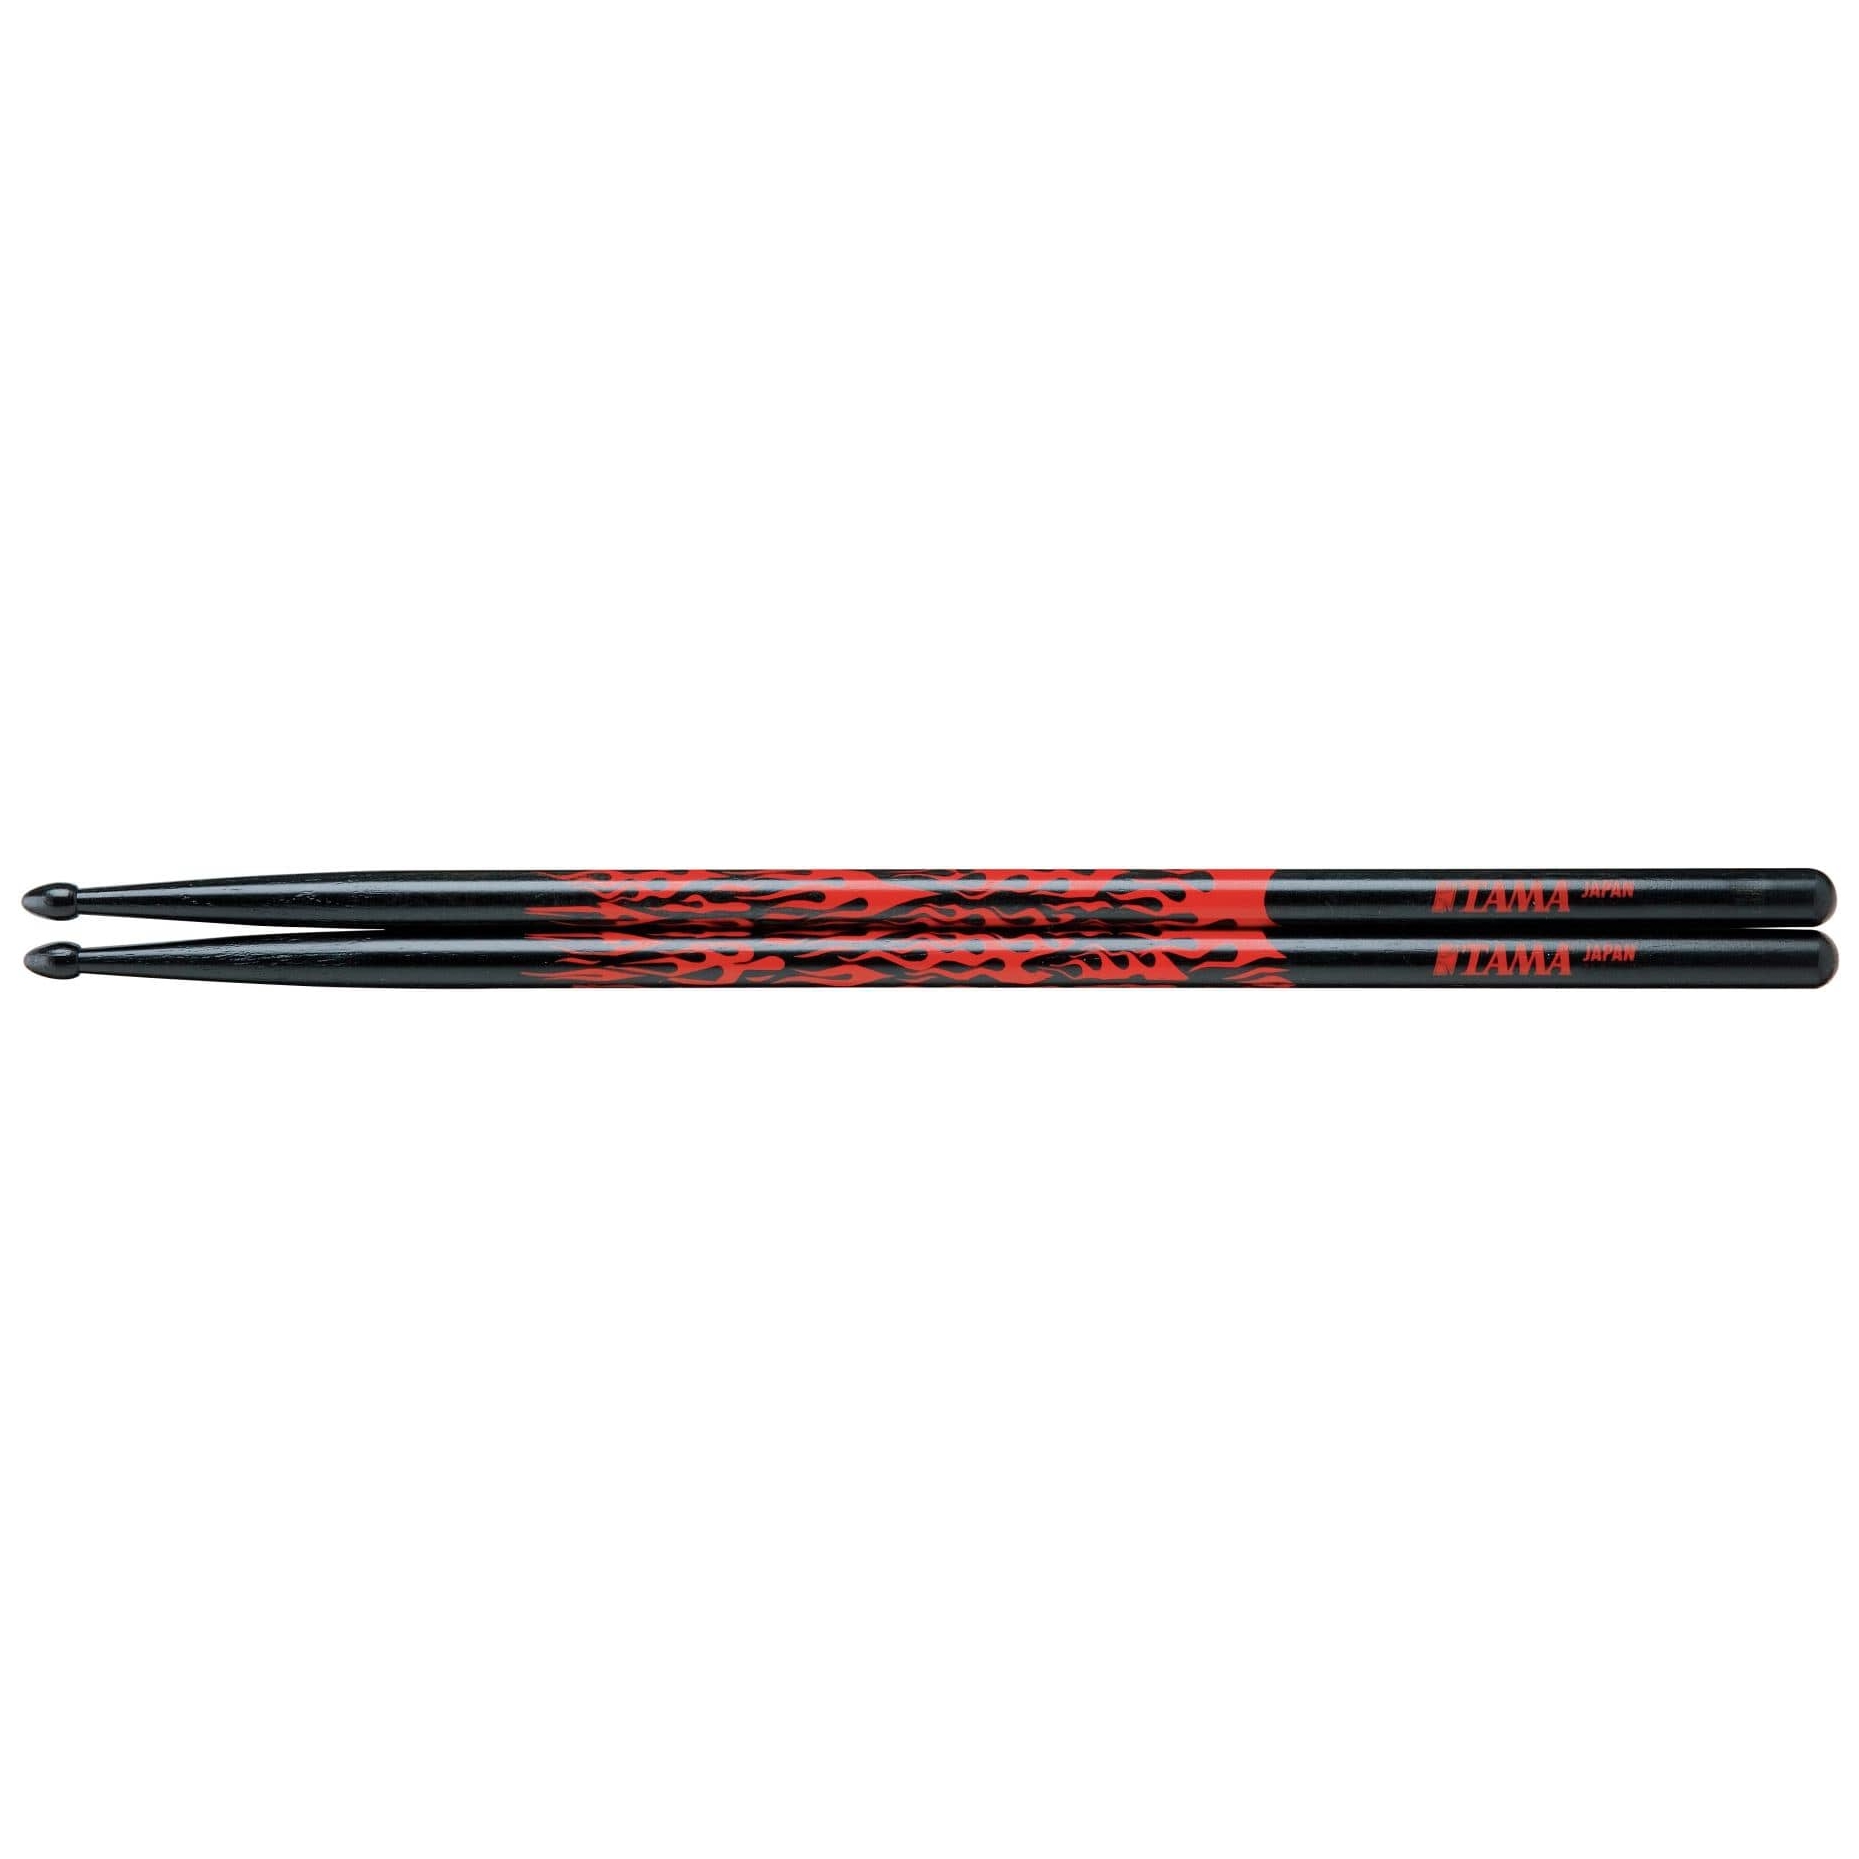 Tama TAMA-O7A-F-BR Rhythmic Fire Drumsticks - 7A-F-BR - Black, Red Pattern